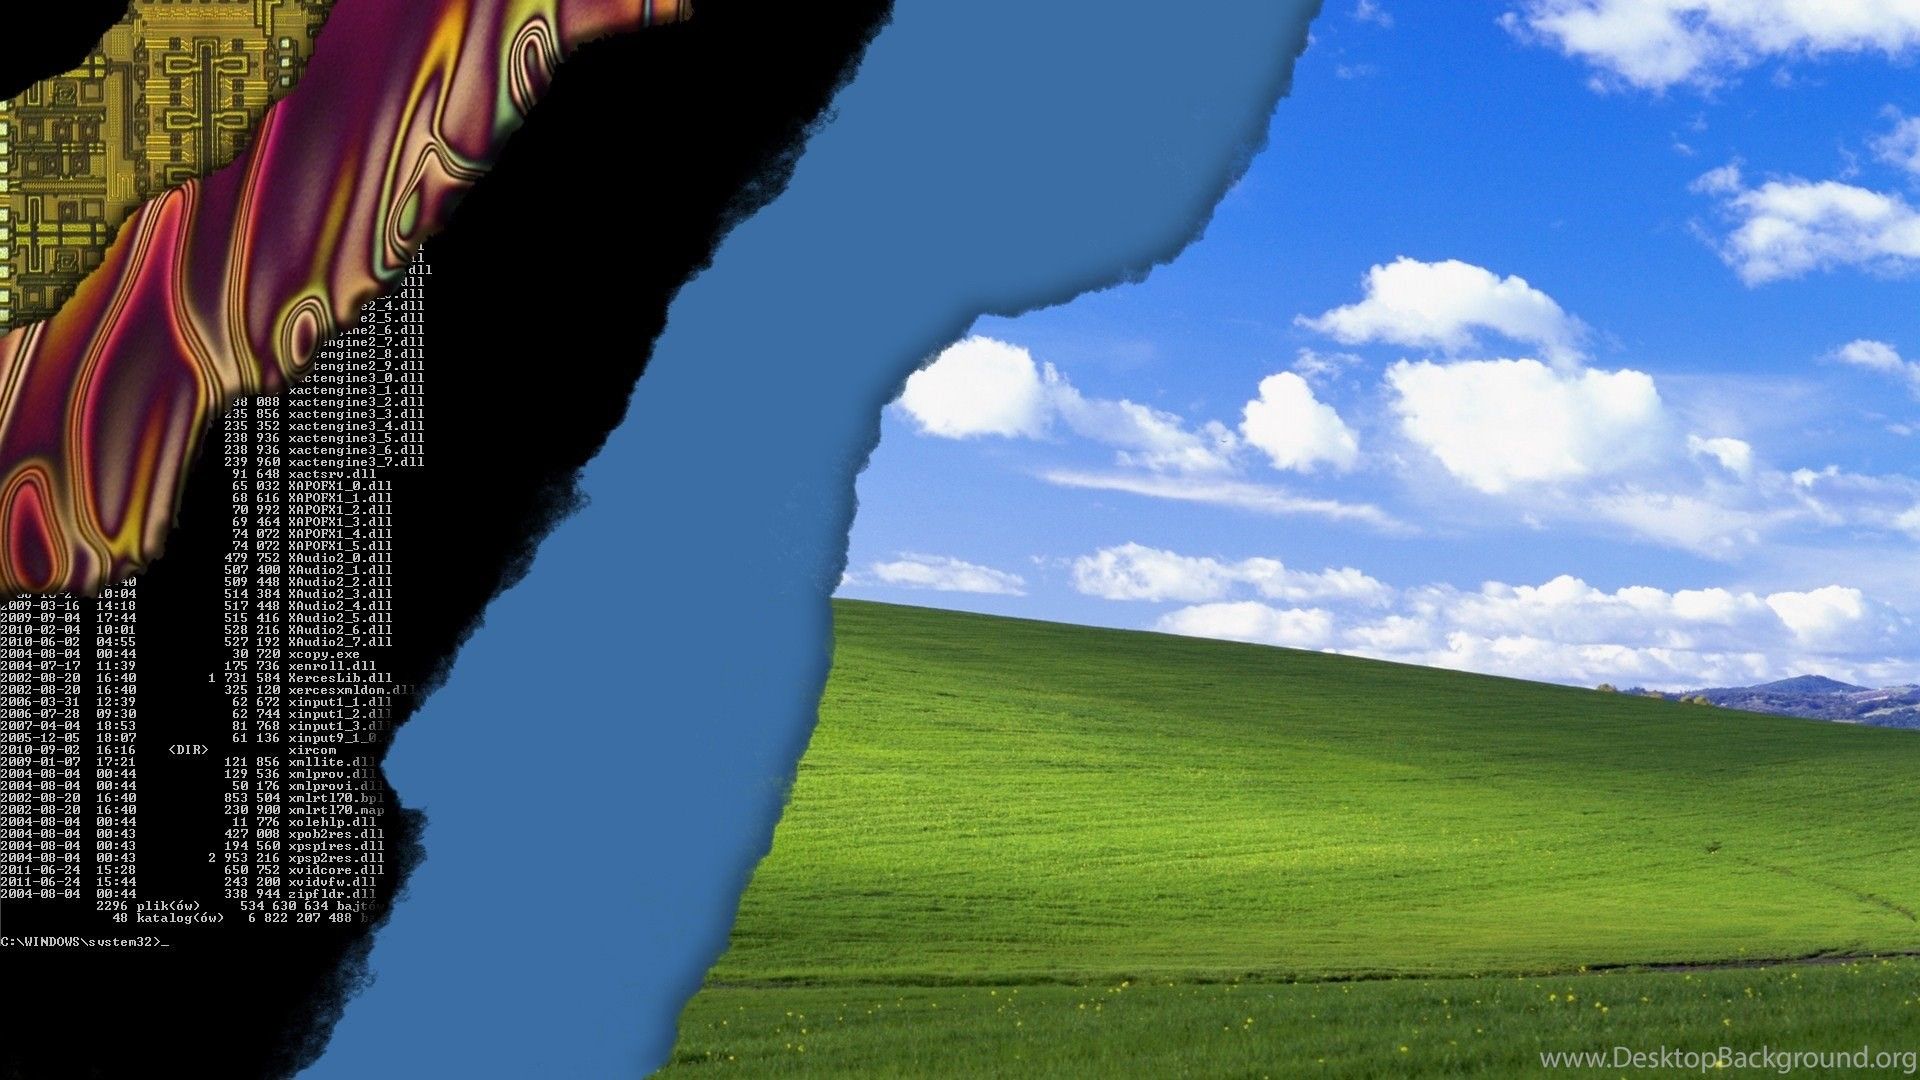 Windows XP Desktop Background